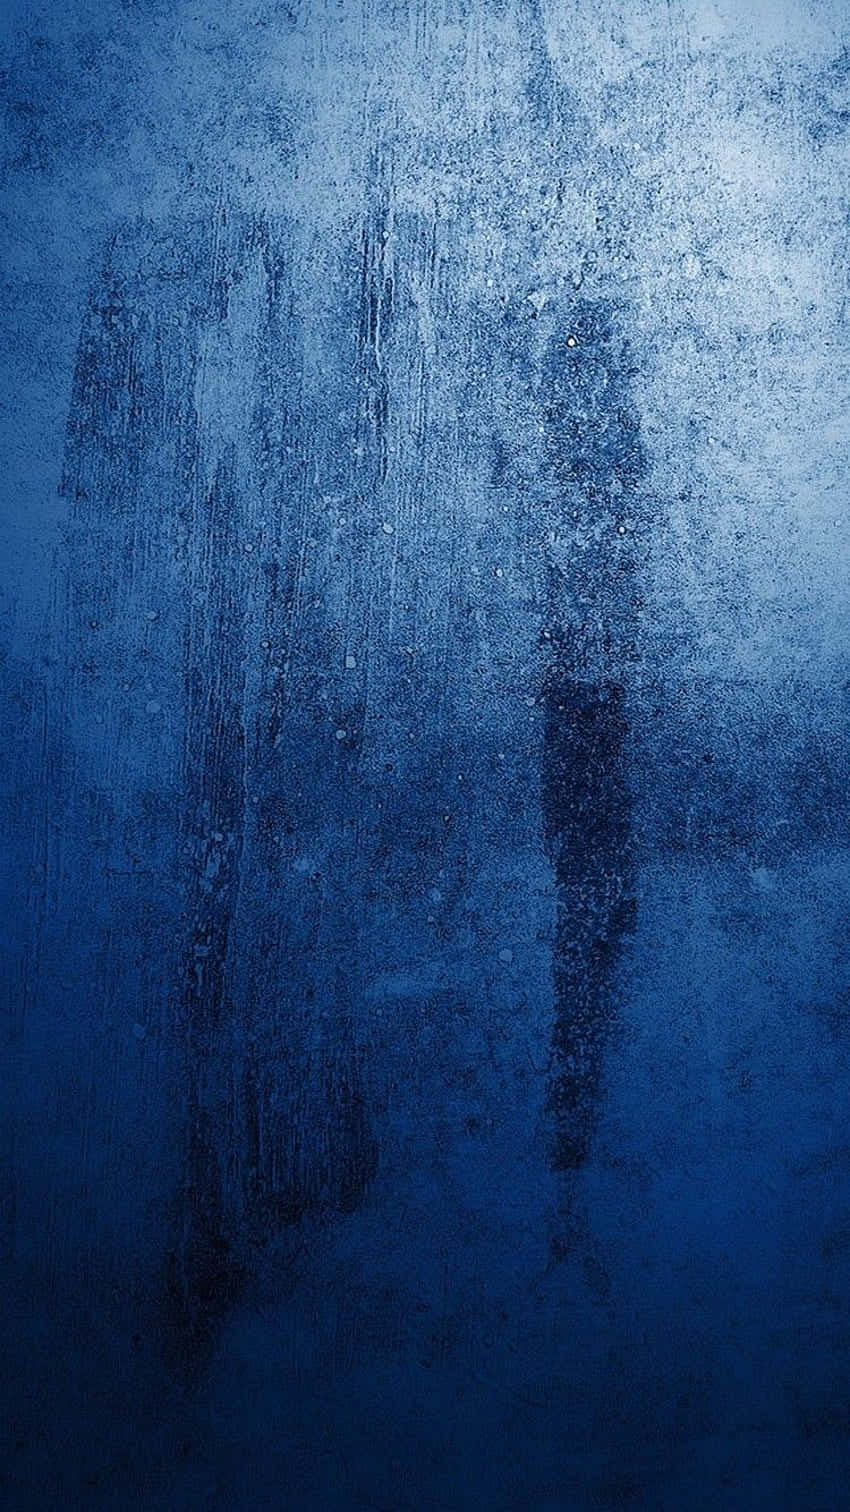 Mysterious blue-toned grunge texture Wallpaper